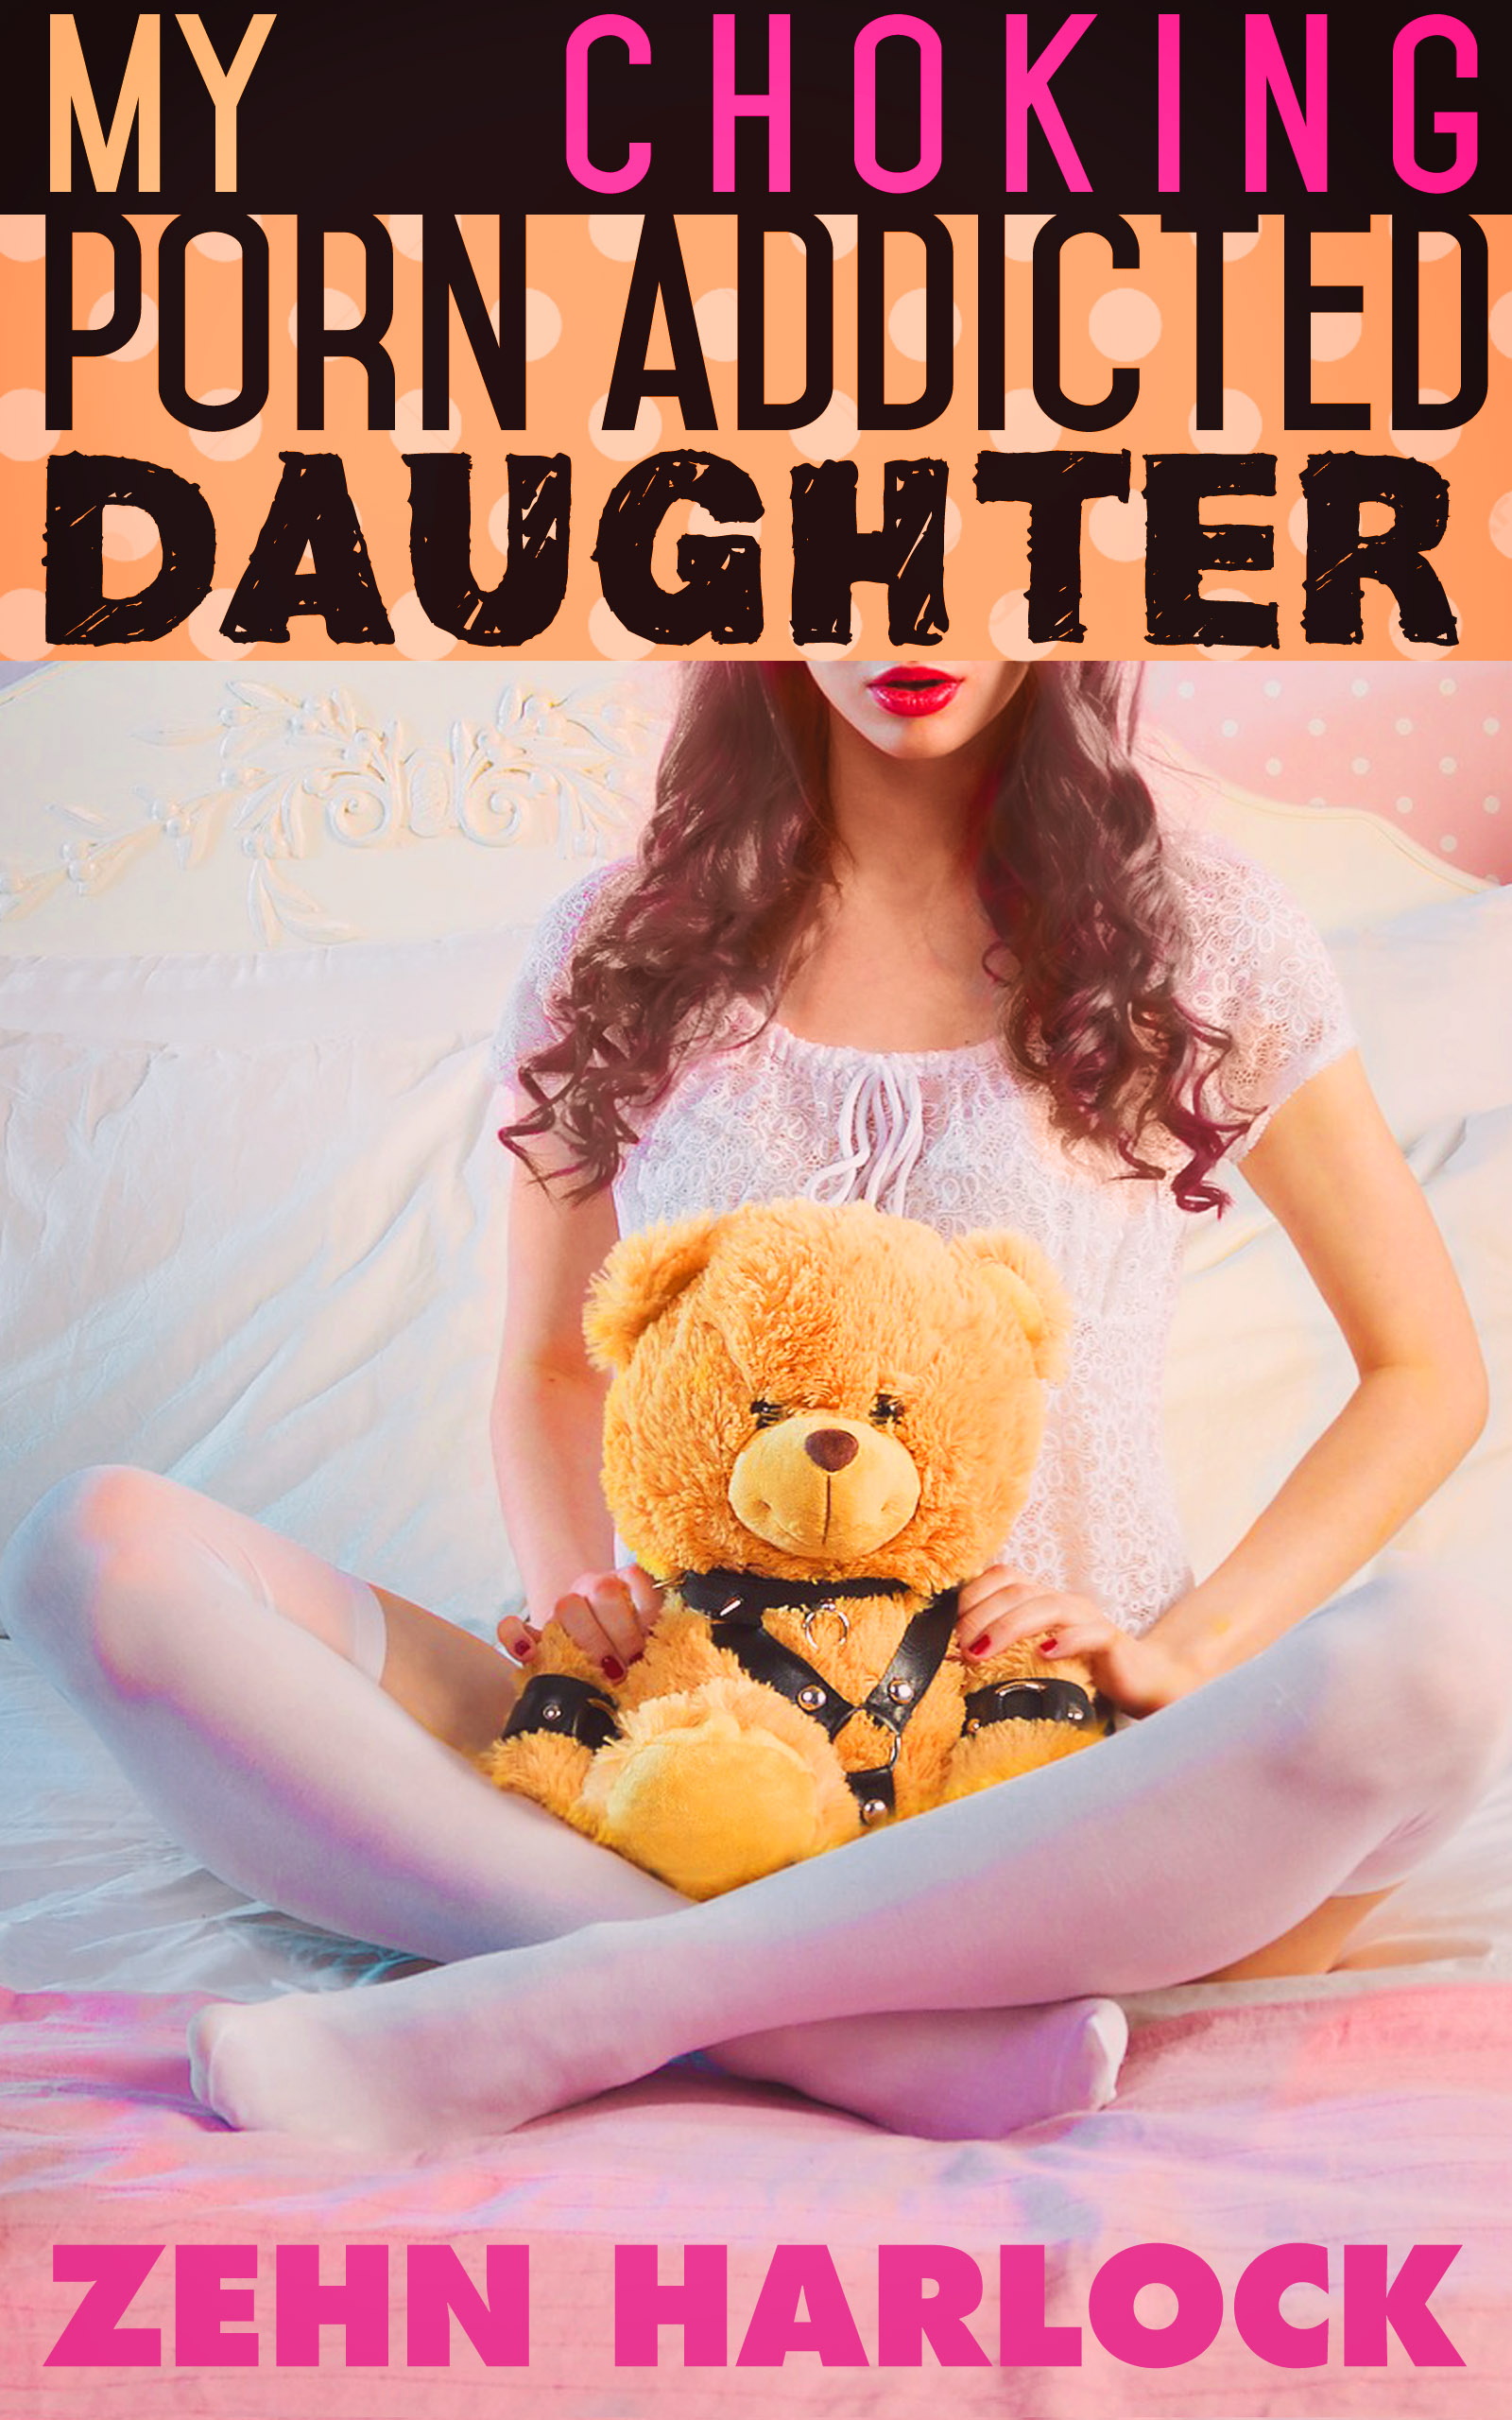 Zehn Porn - Smashwords â€“ My Choking Porn Addicted Daughter â€“ a book by Zehn Harlock